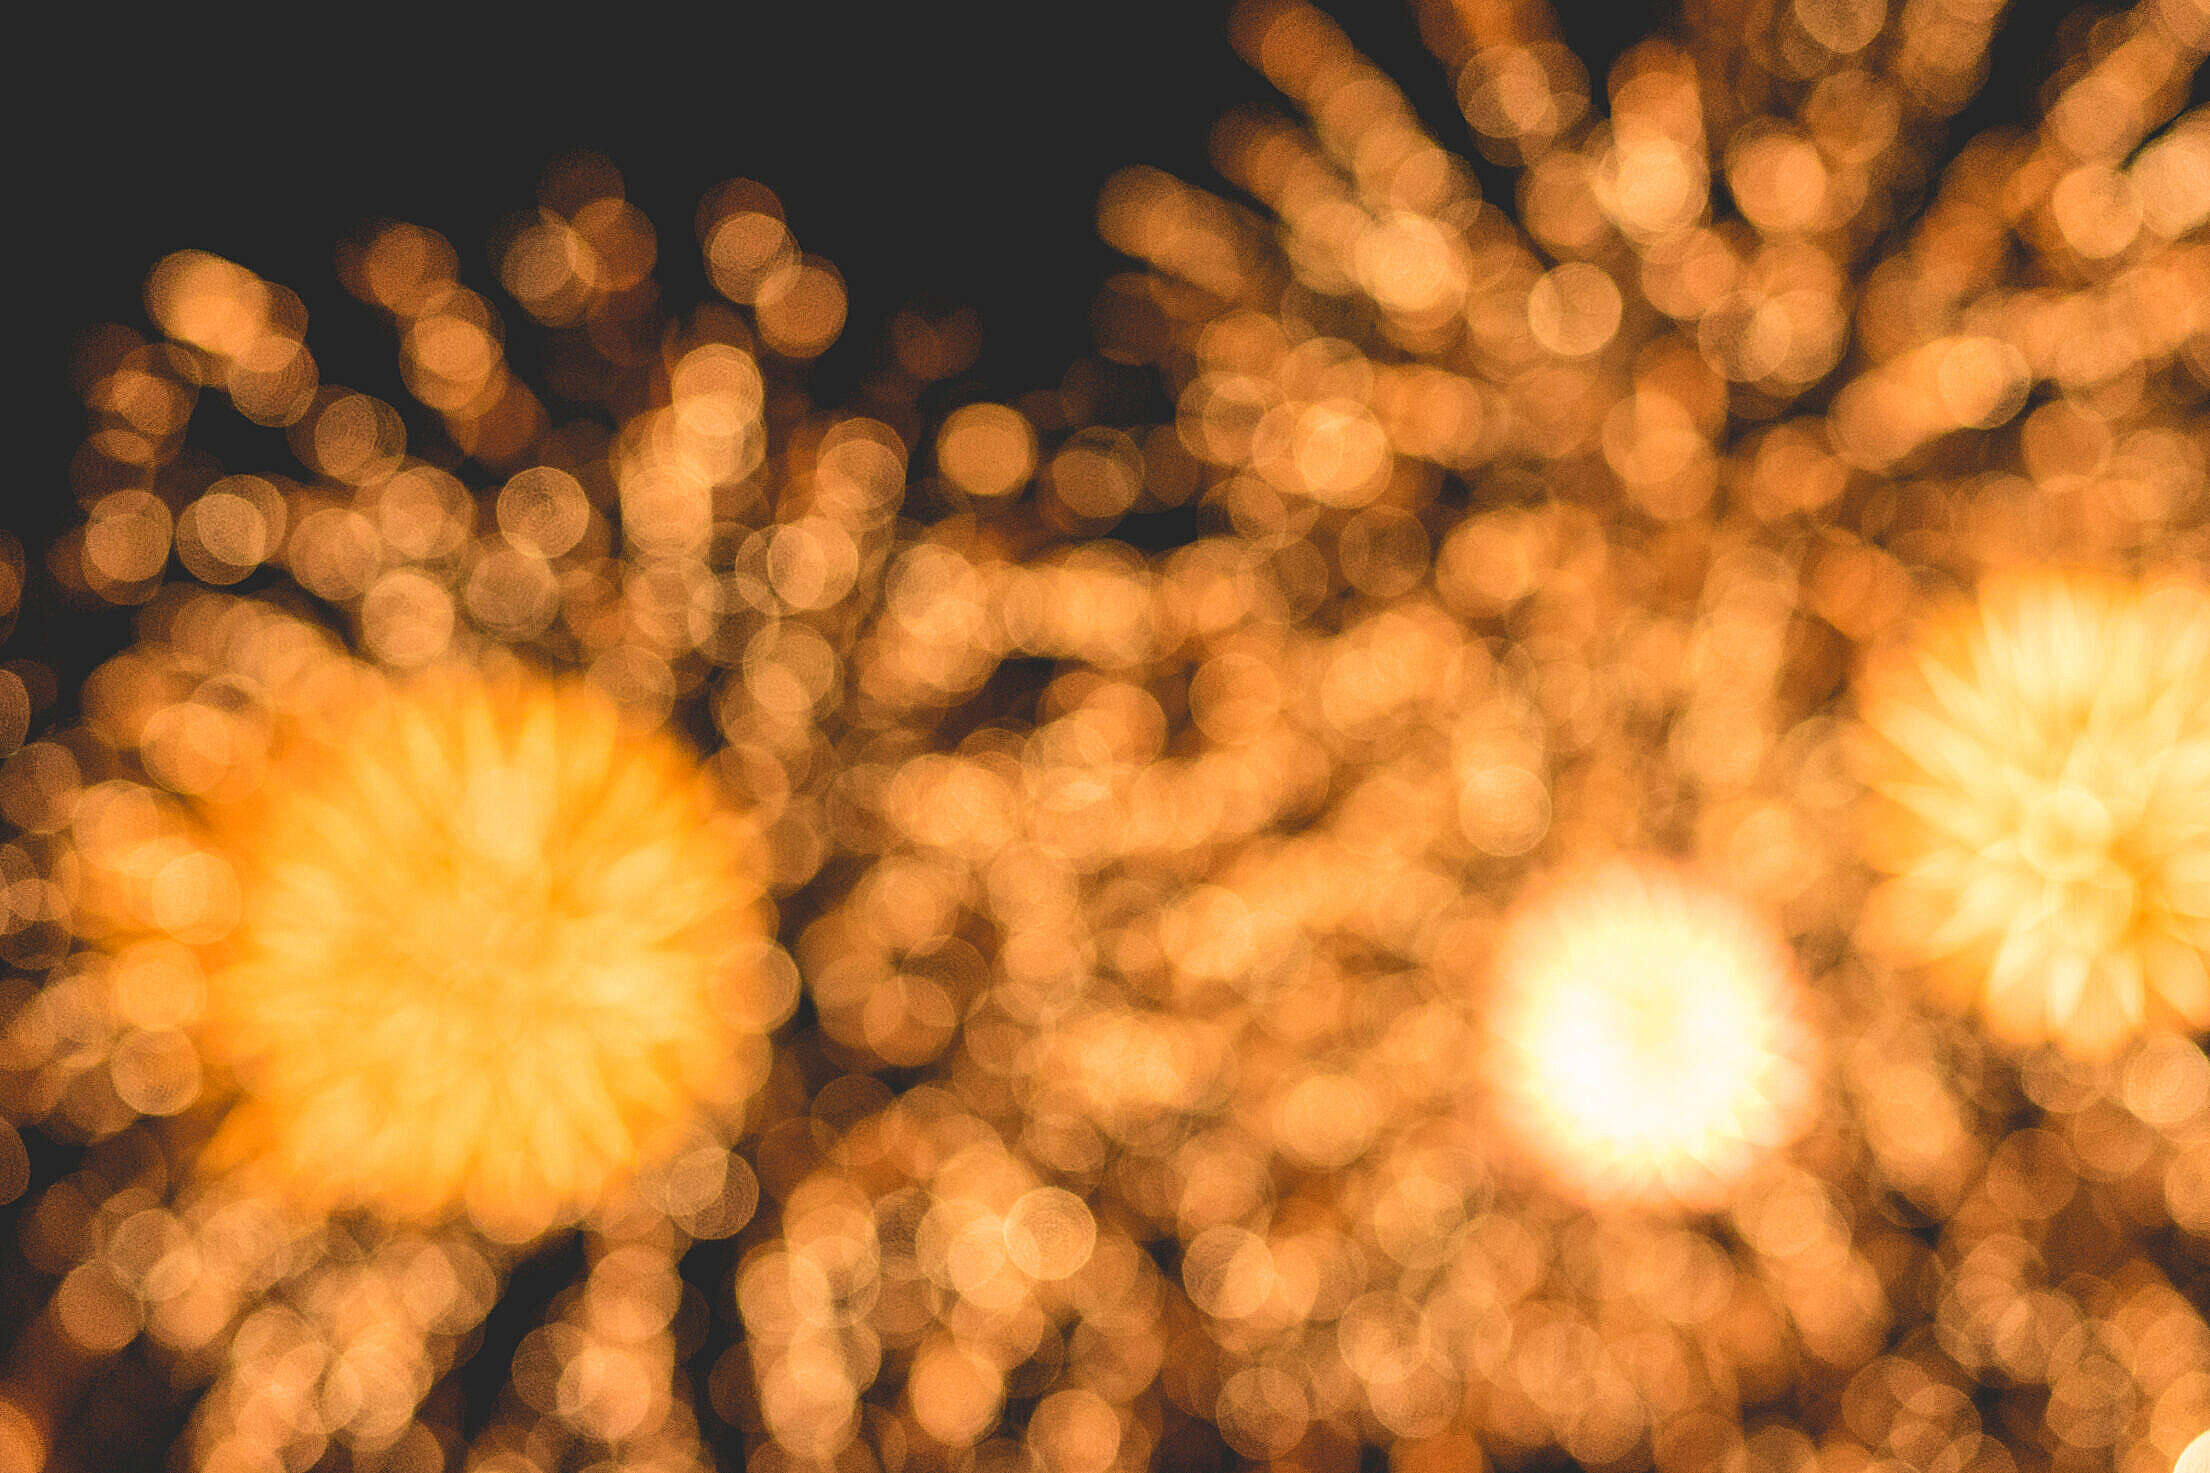 Bokeh Classy Golden Fireworks Lights Background #2 Free Stock Photo